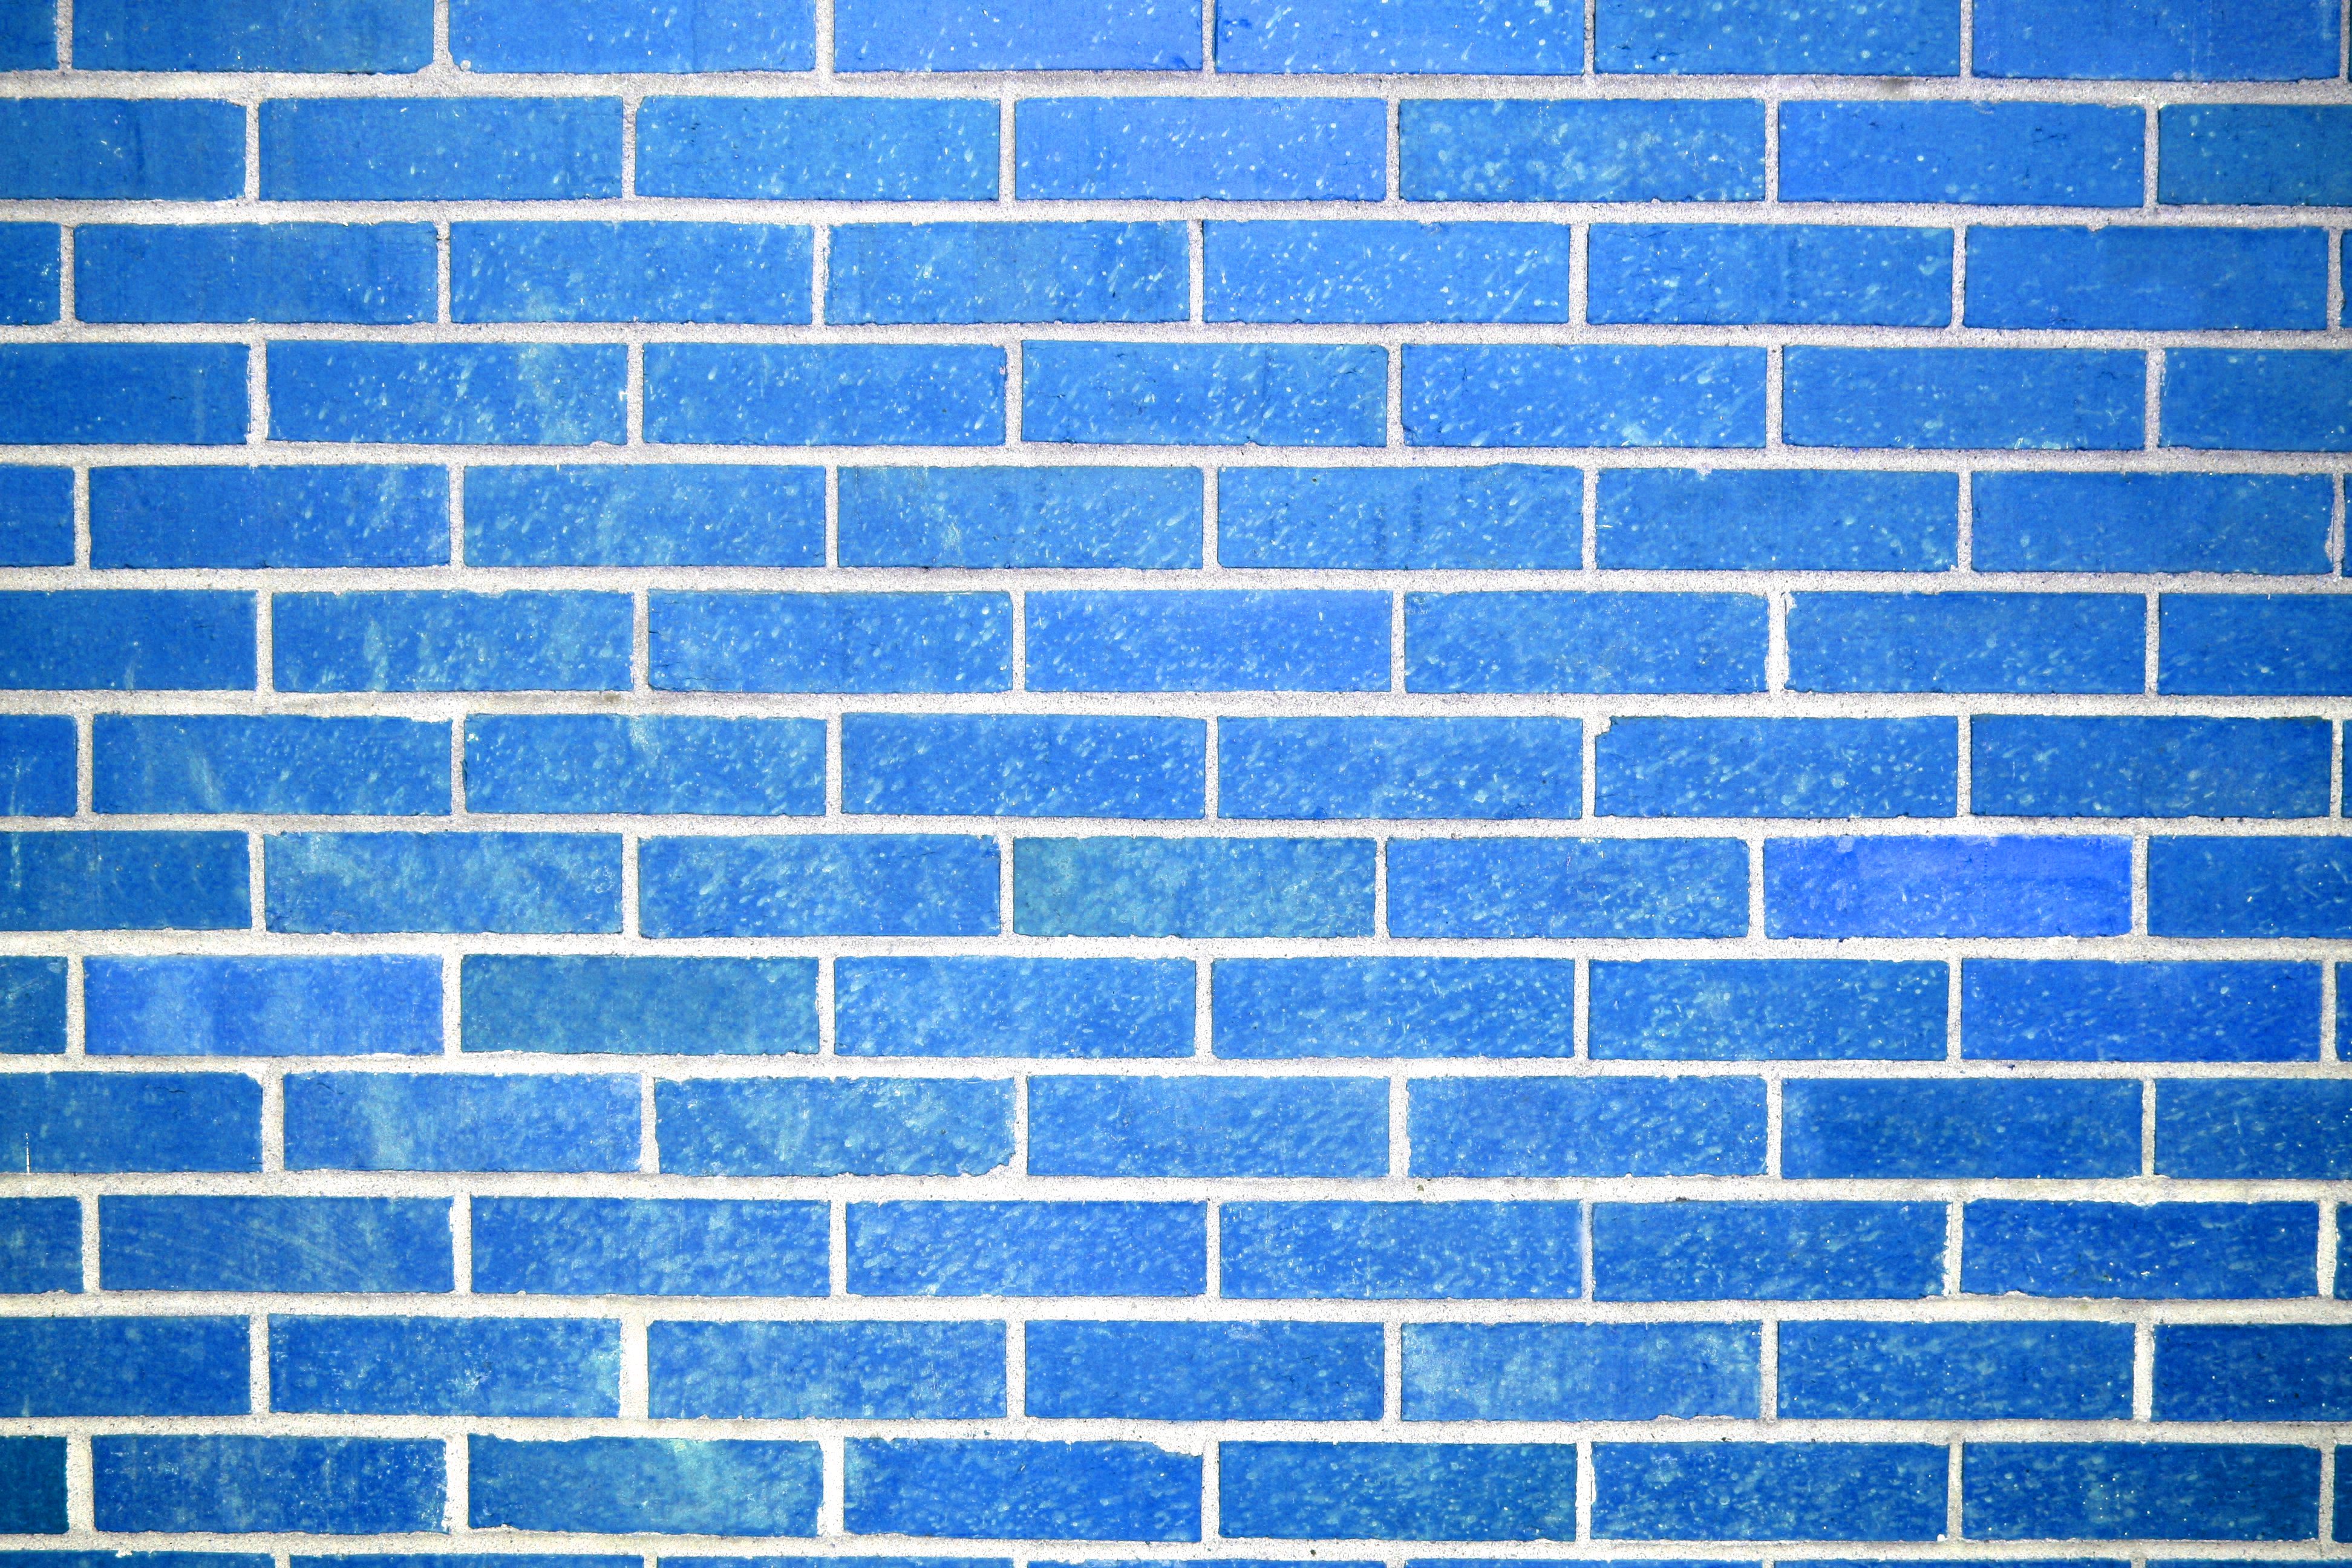 Sky Blue Brick Wall Texture Picture Photograph Photos Public